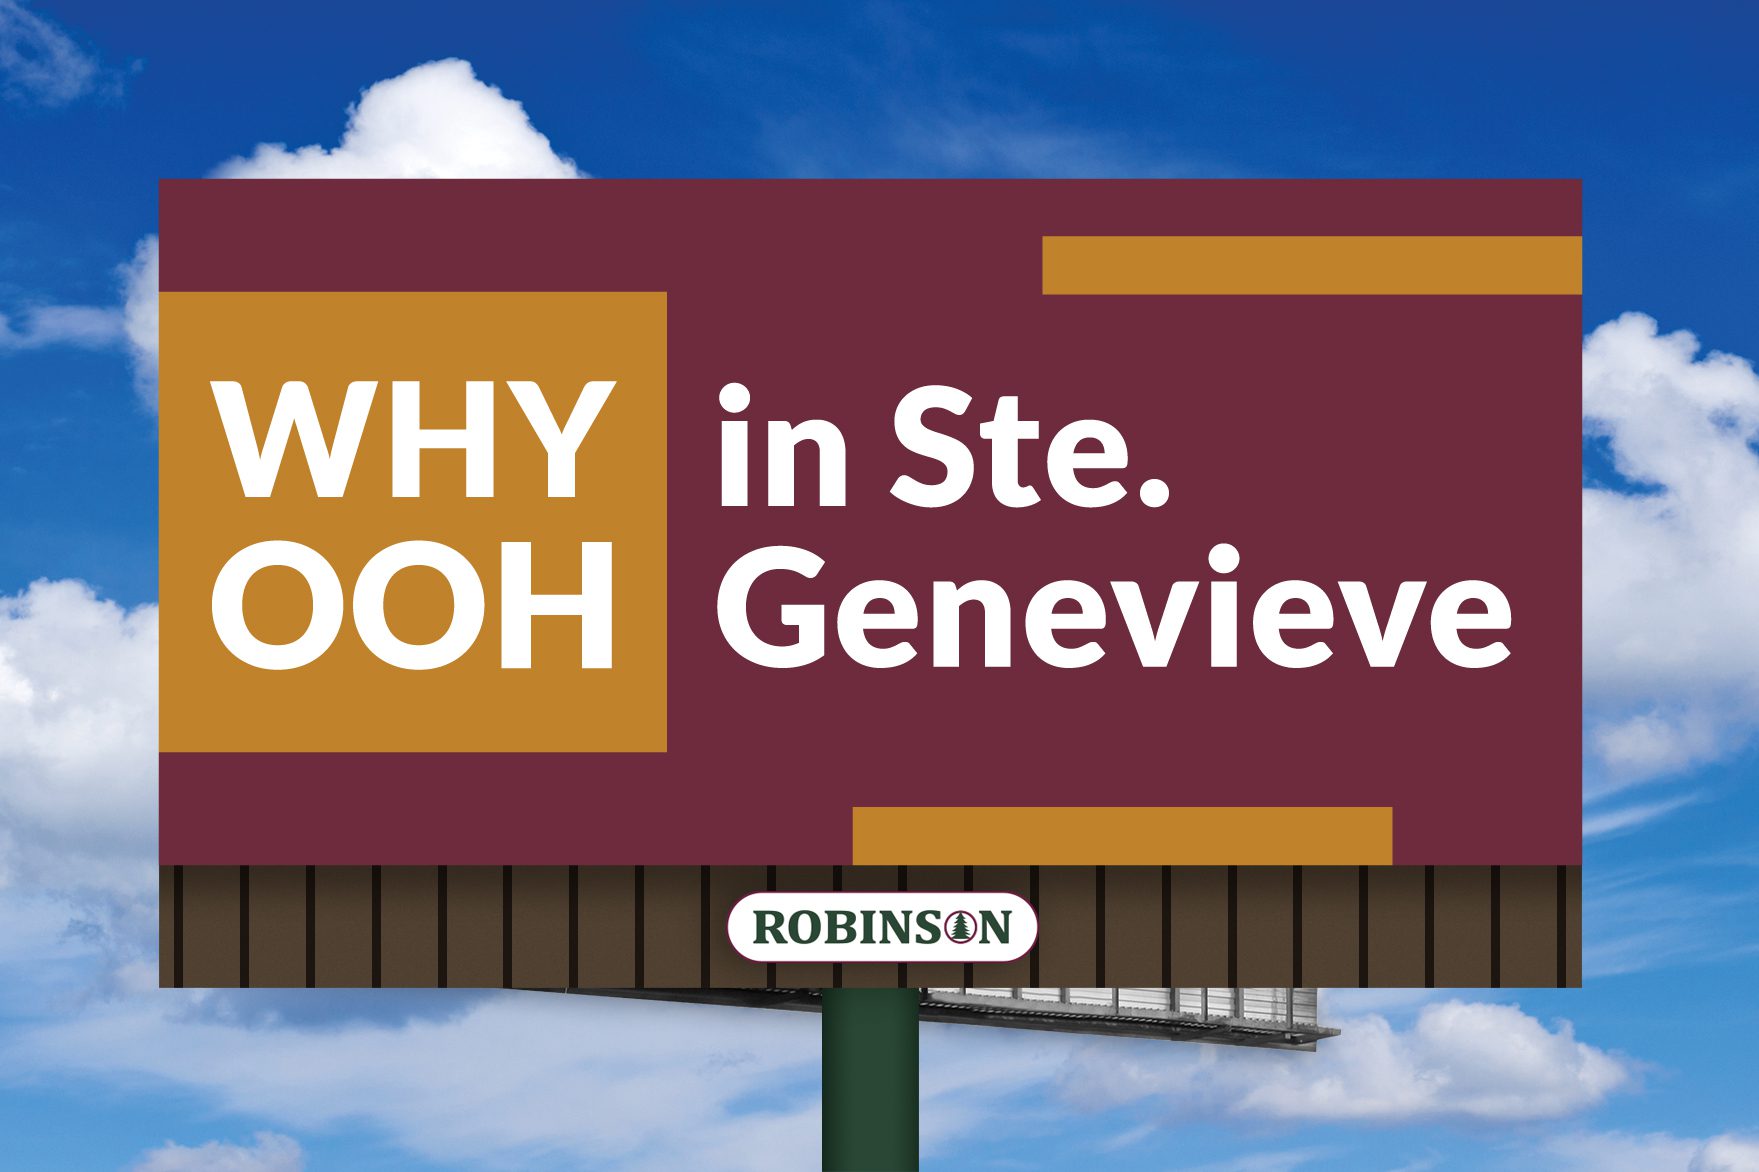 Ste. Genevieve, Missouri digital billboard advertising